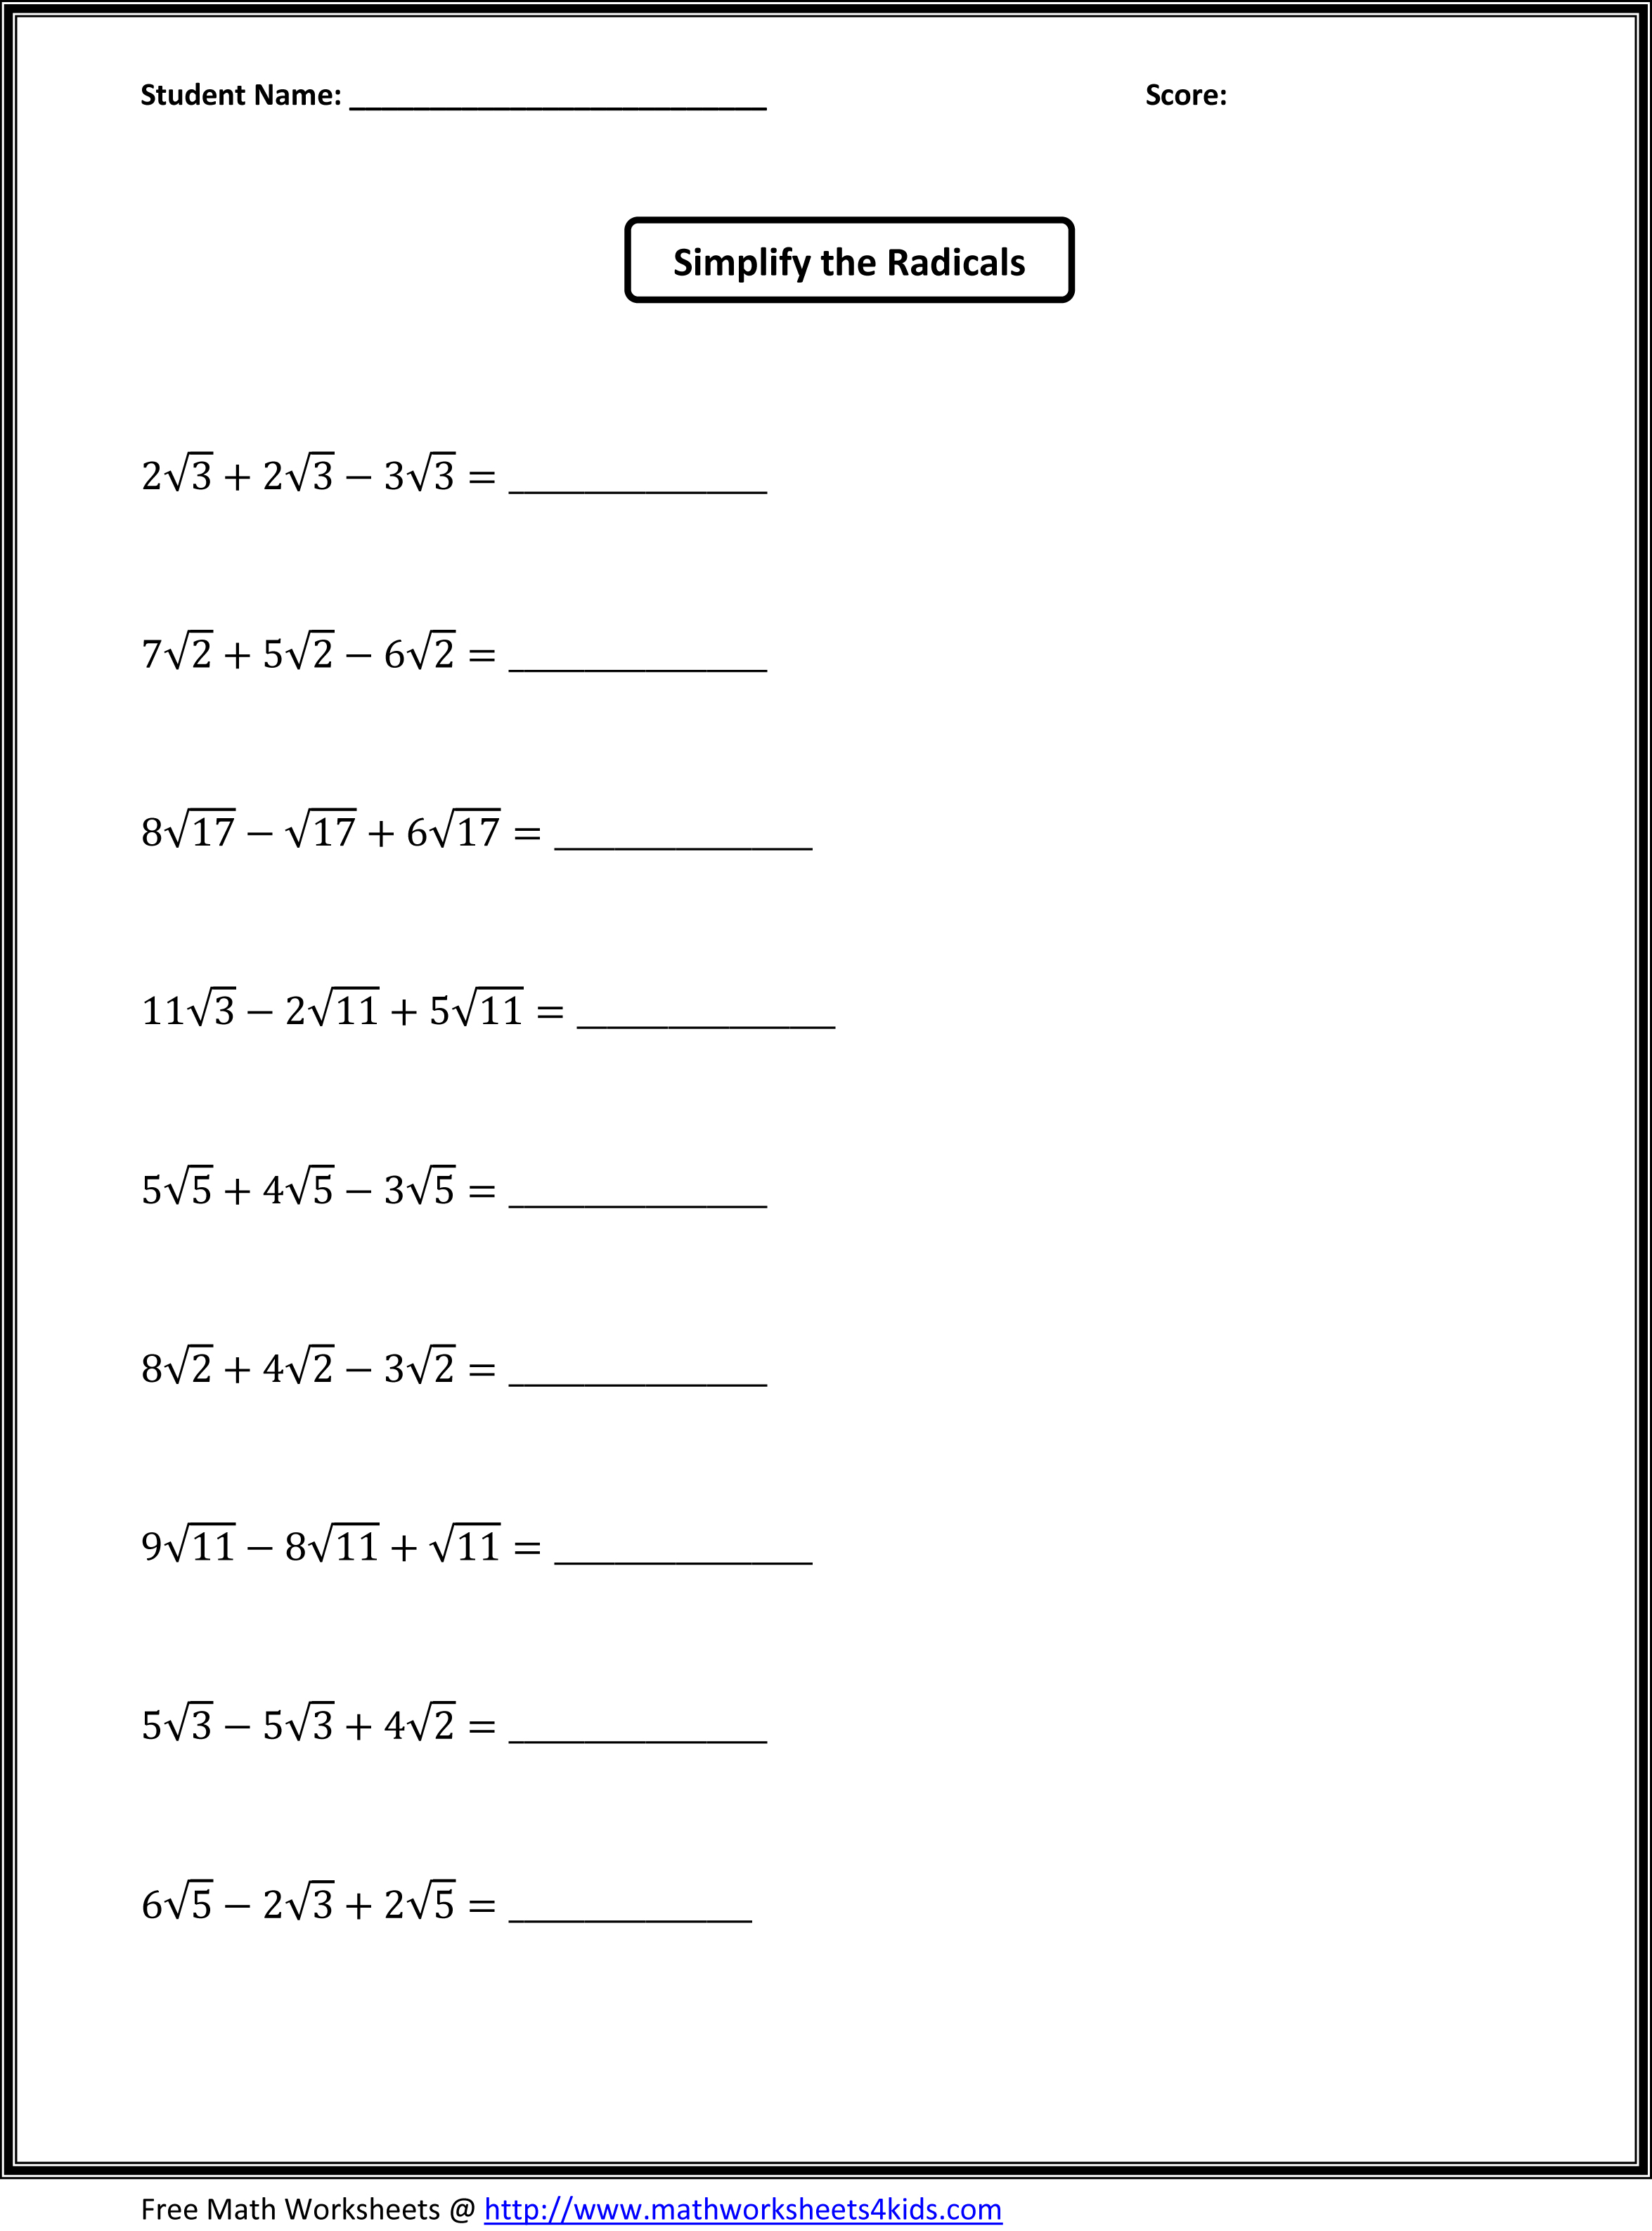 12 Best Images Of 7th Grade Math Worksheets Problems 7th Grade Math Worksheets 7th Grade Math